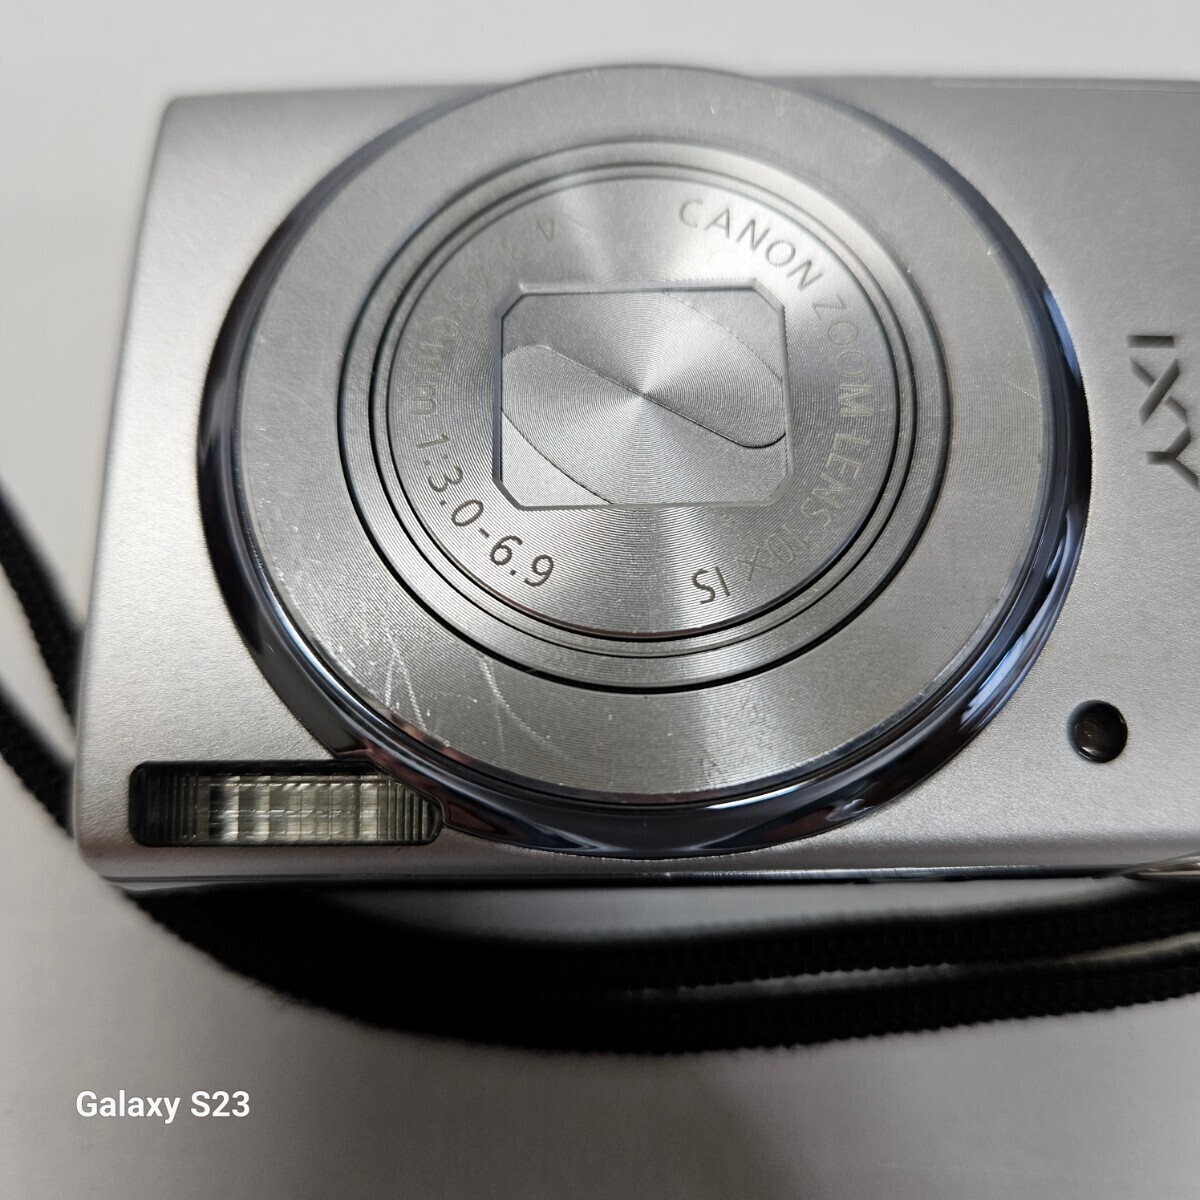 * Canon i comb -Canon IXY 140 compact digital camera silver body, accessory attaching # electrification has confirmed 